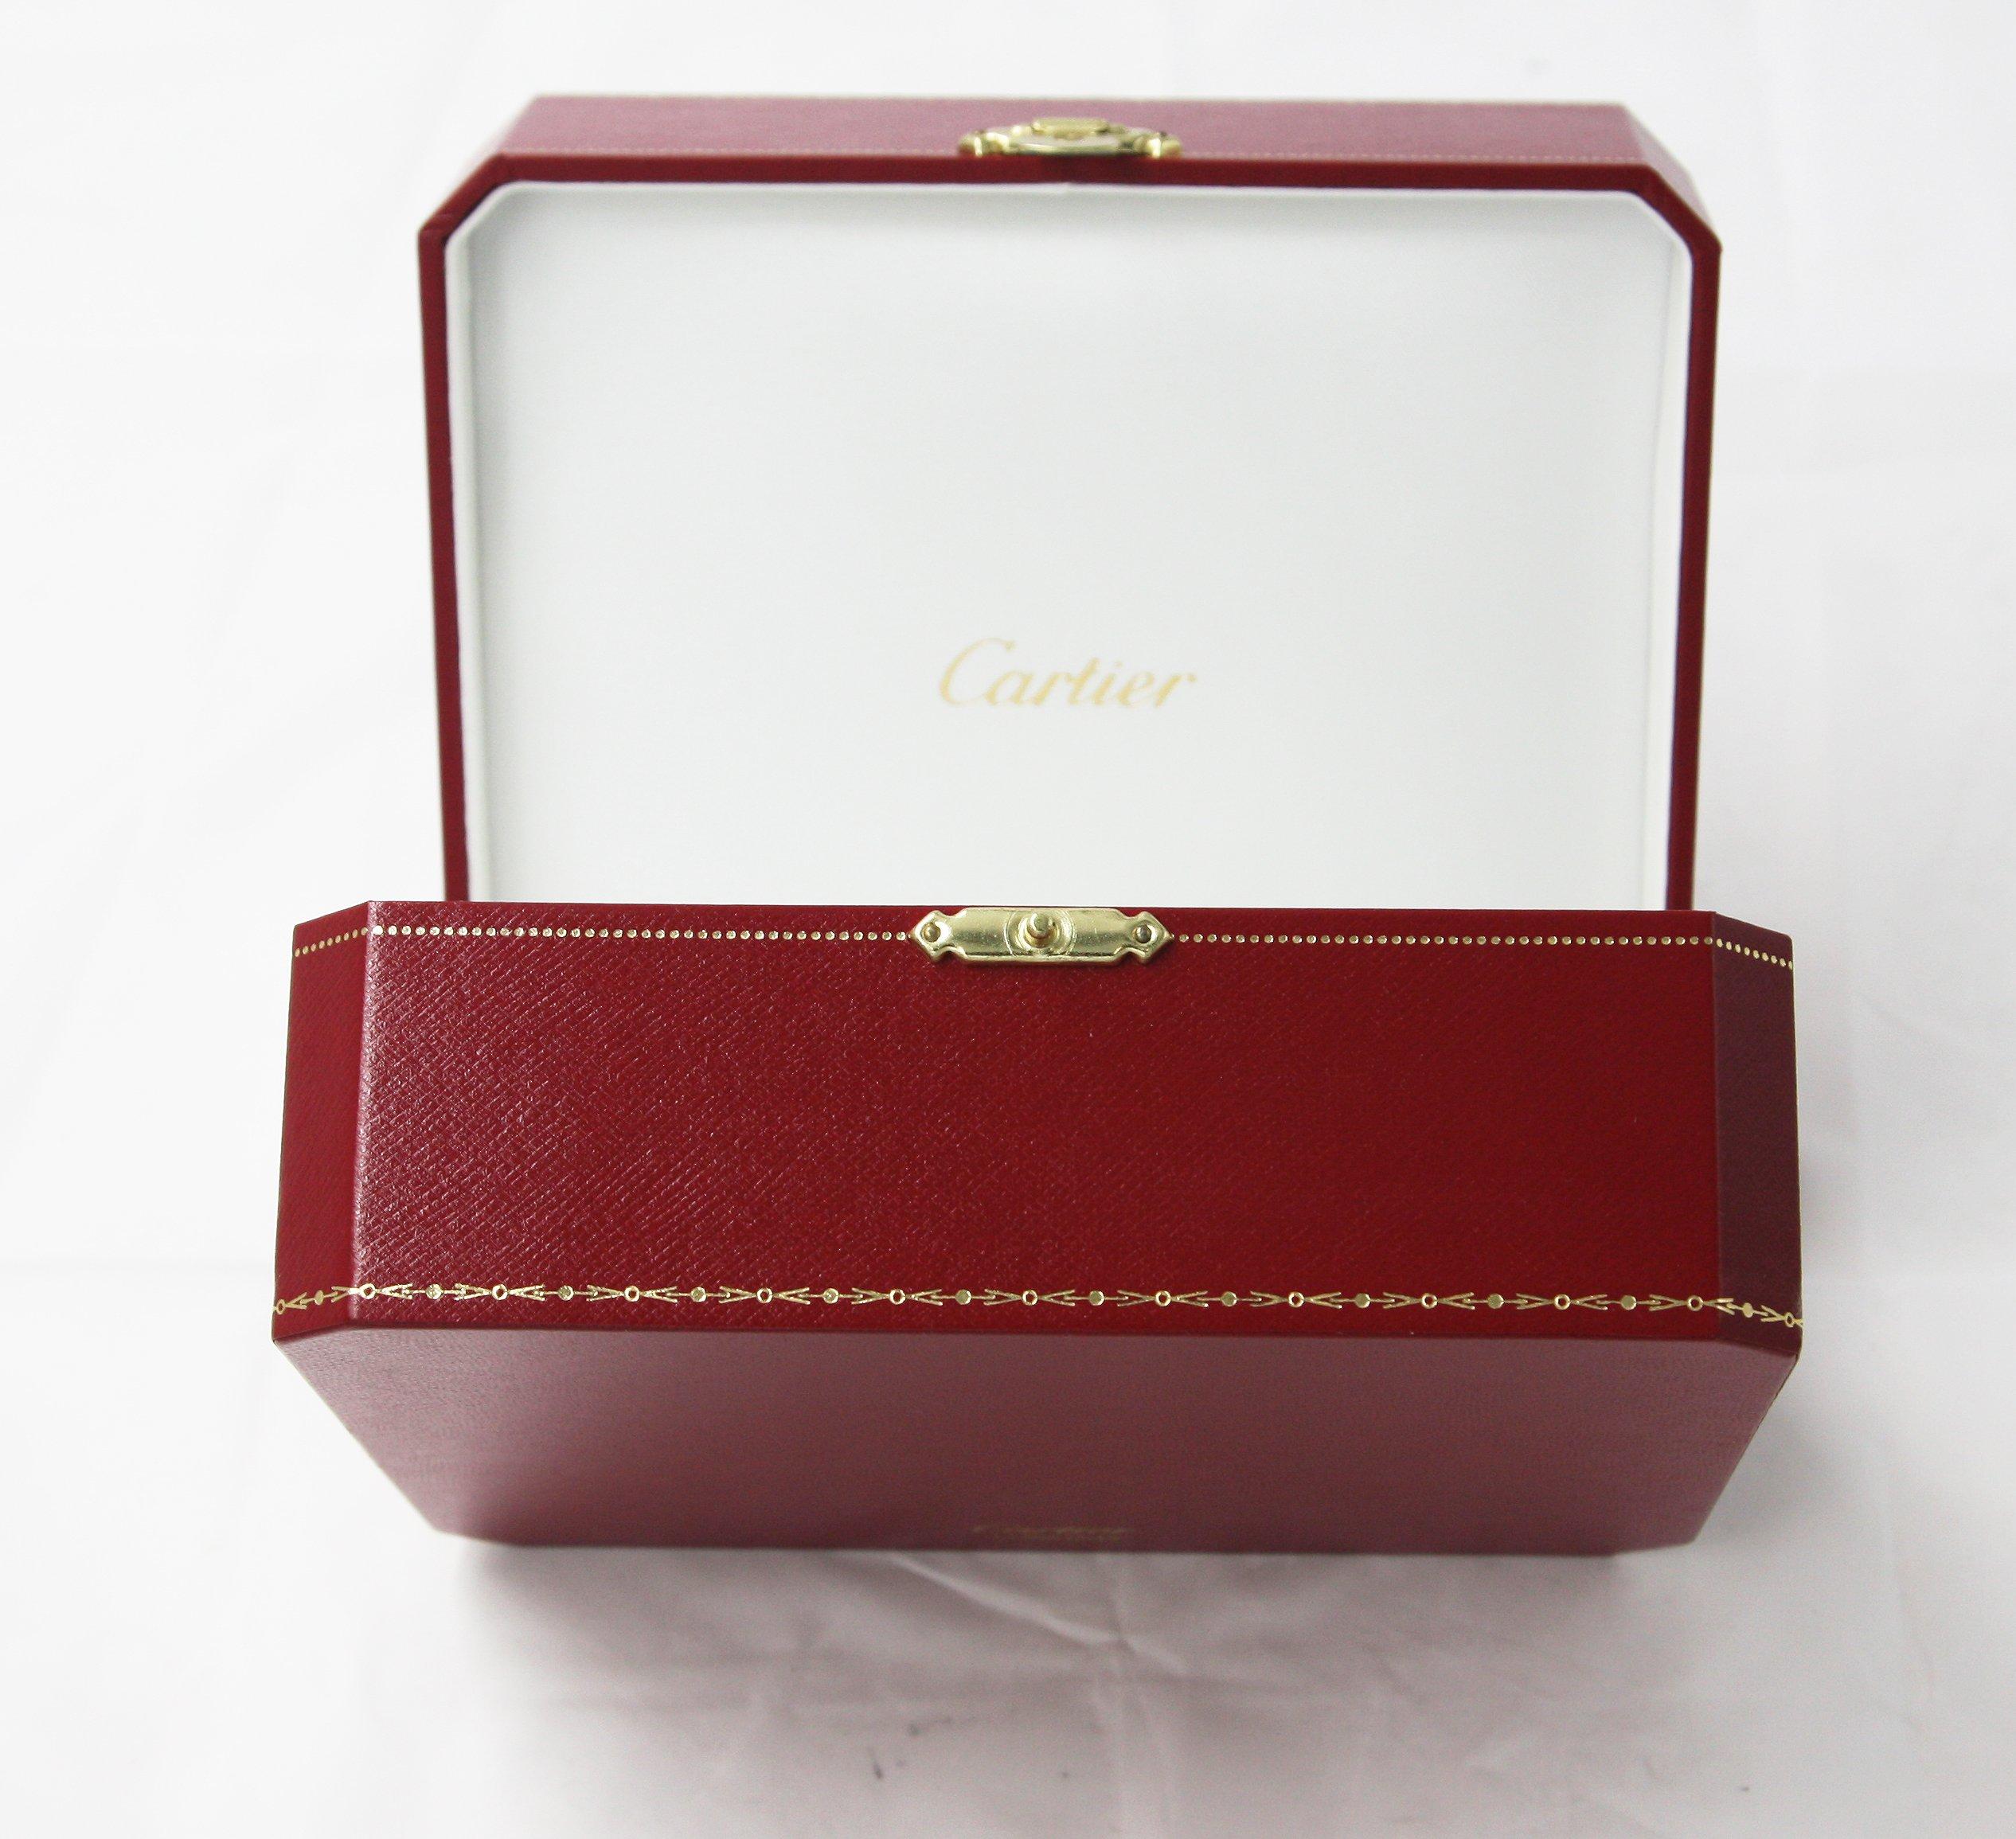 Cartier Red Watch Box 4